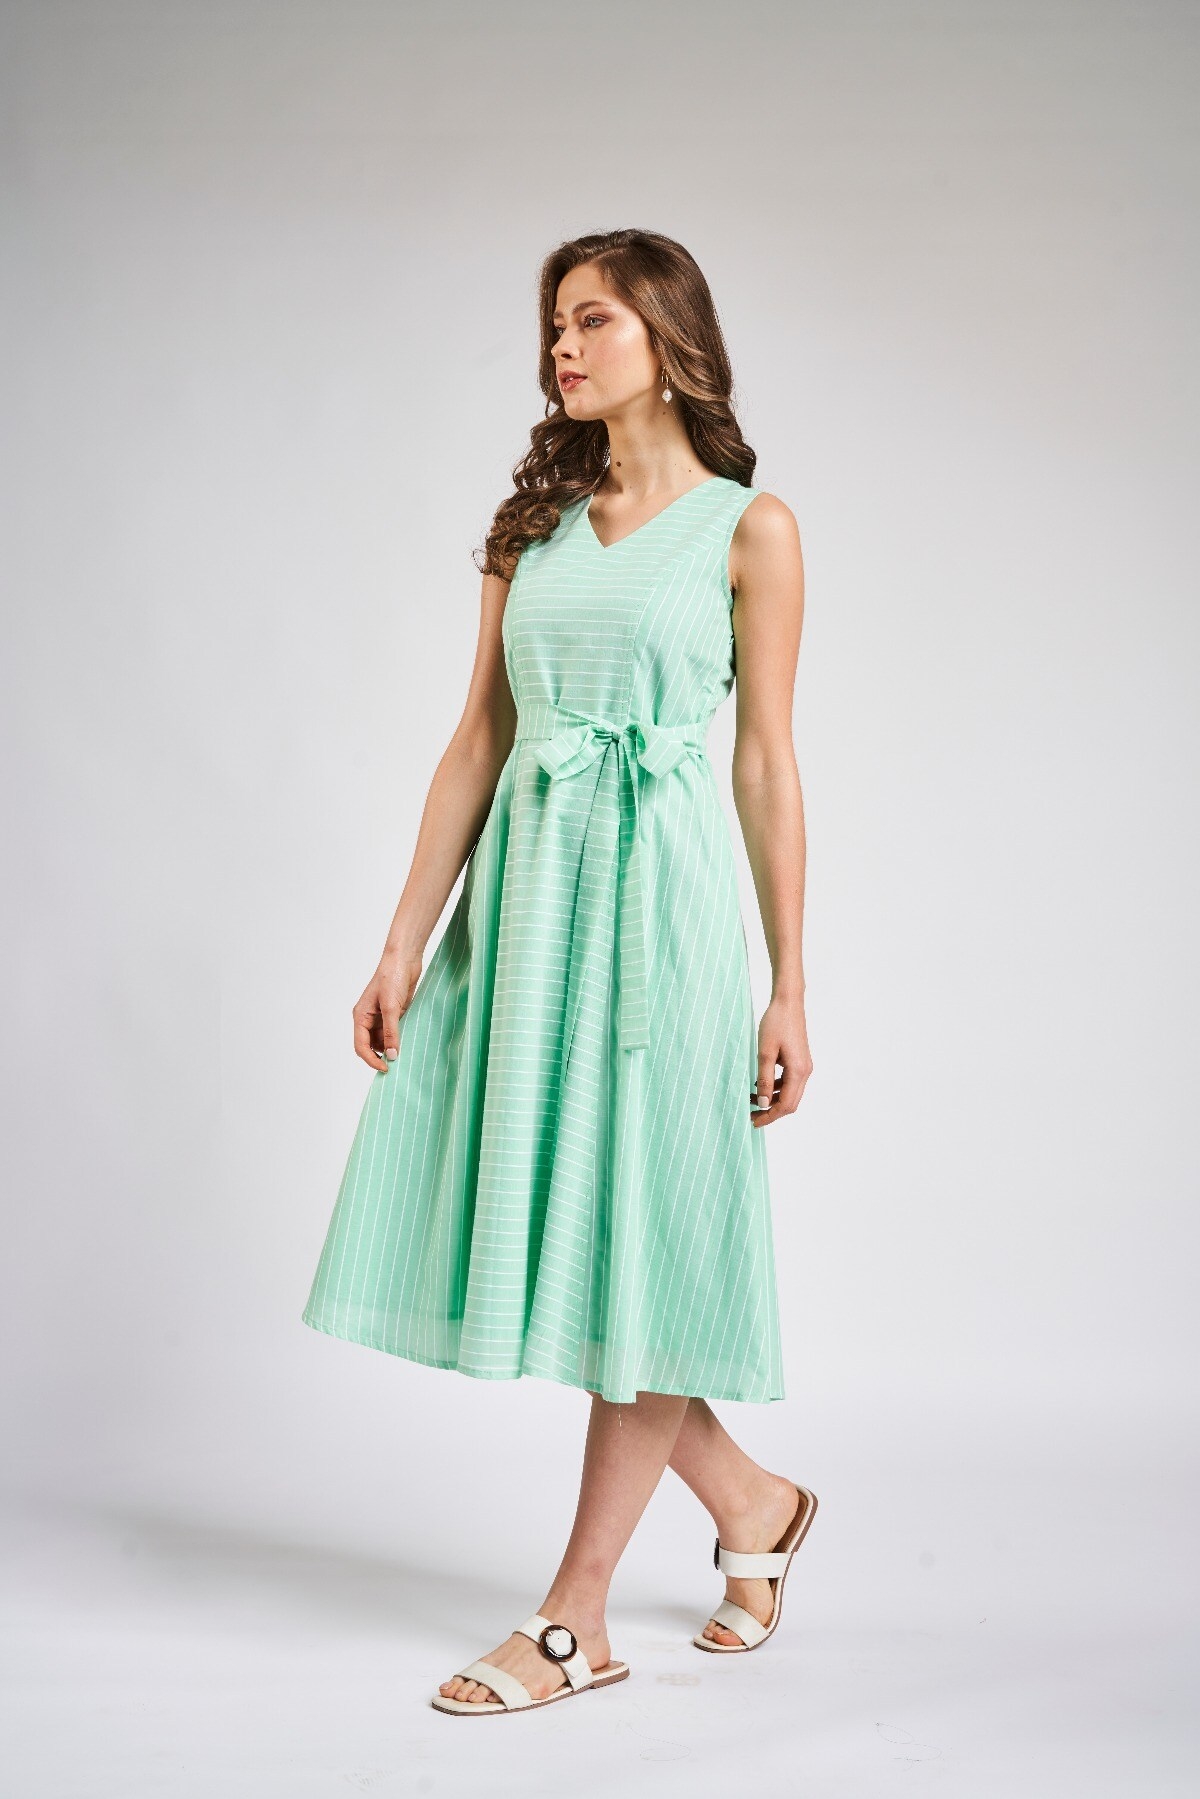 Wolddress Womens Casual Summer Midi Dresses Plus Size Sleeveless Pockets  Loose Plain Beach Dress Army Green 3X : Amazon.in: Fashion